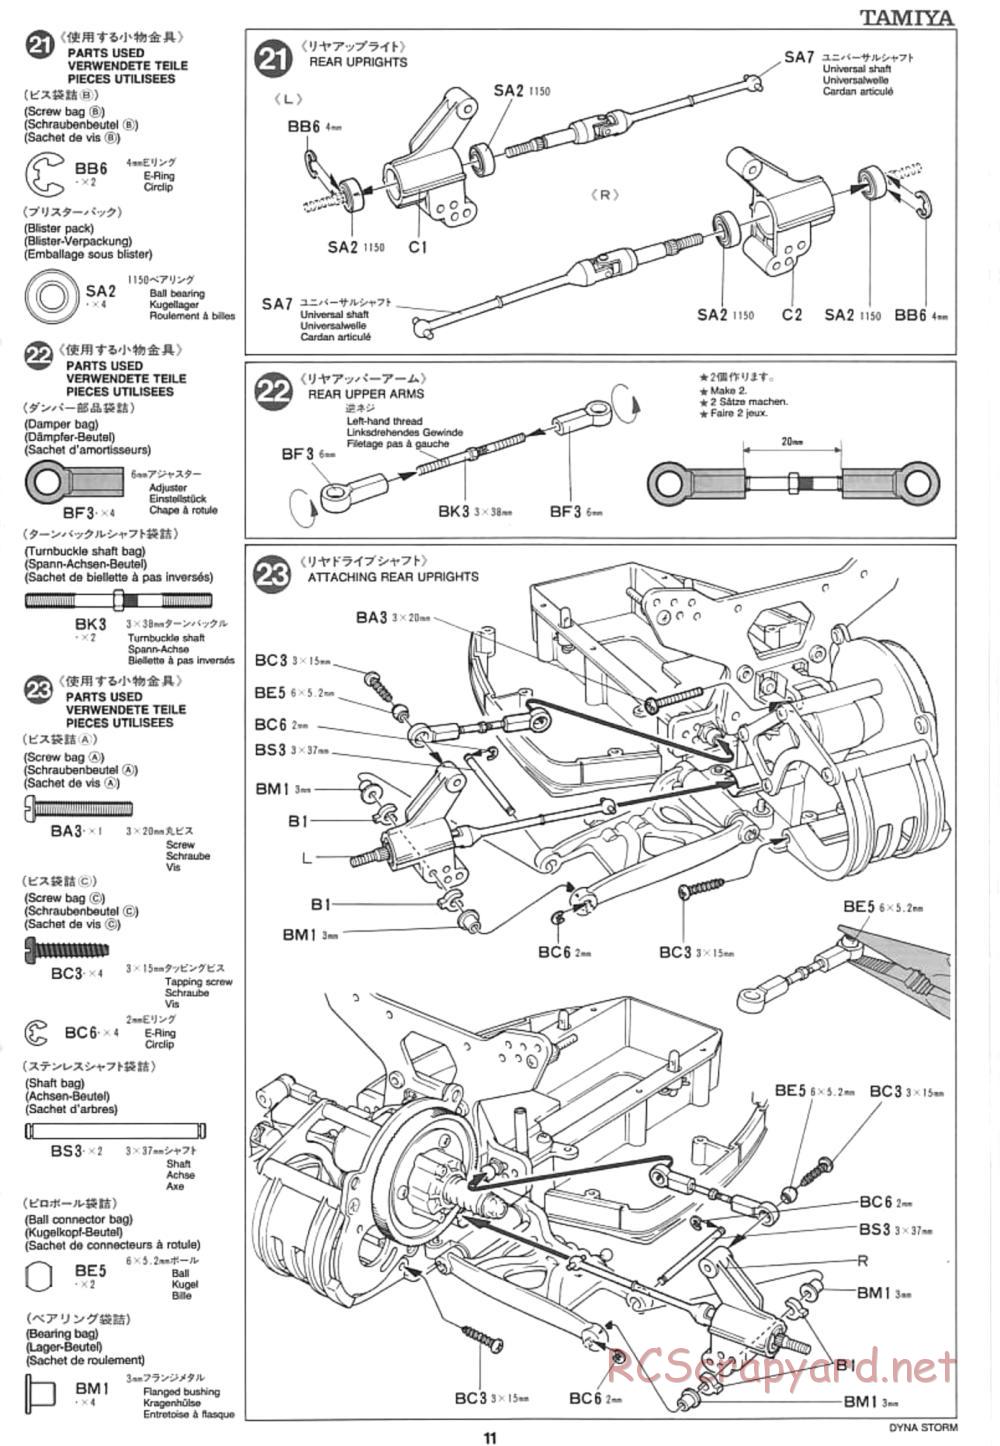 Tamiya - Dyna Storm Chassis - Manual - Page 11